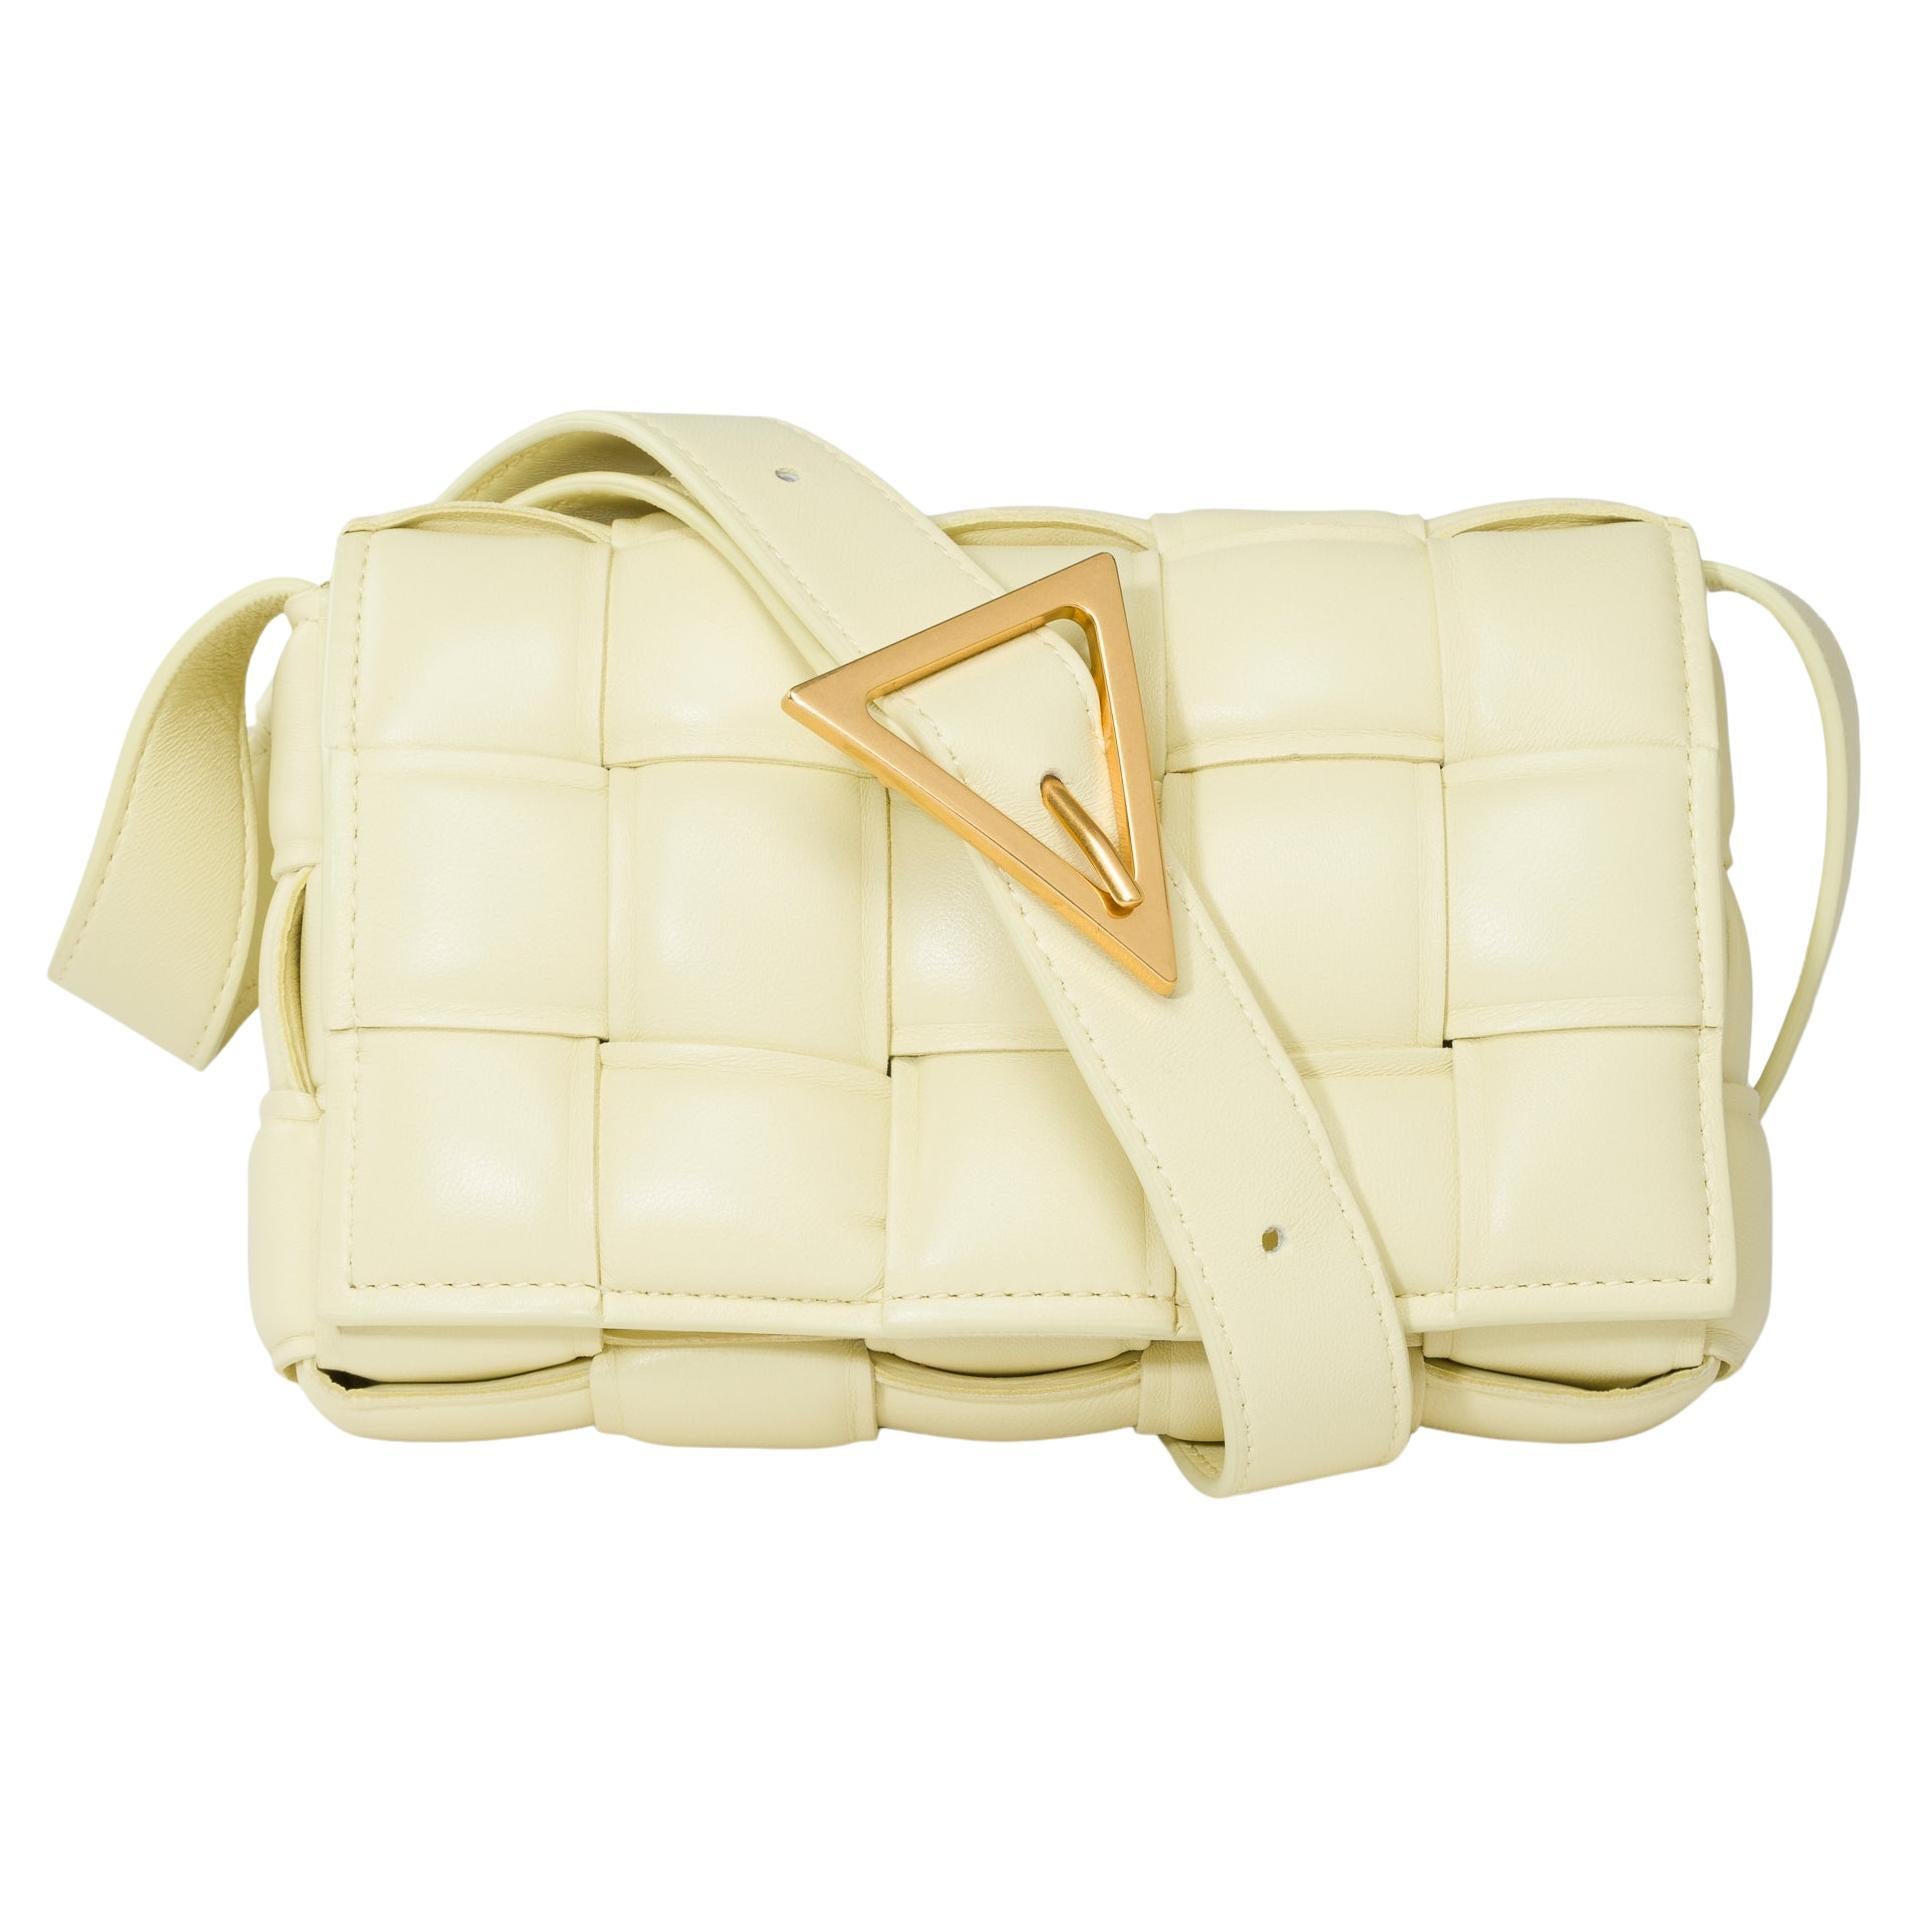 Bottega Veneta Cassette 19 shoulder bag in beige lambskin leather, GHW For Sale